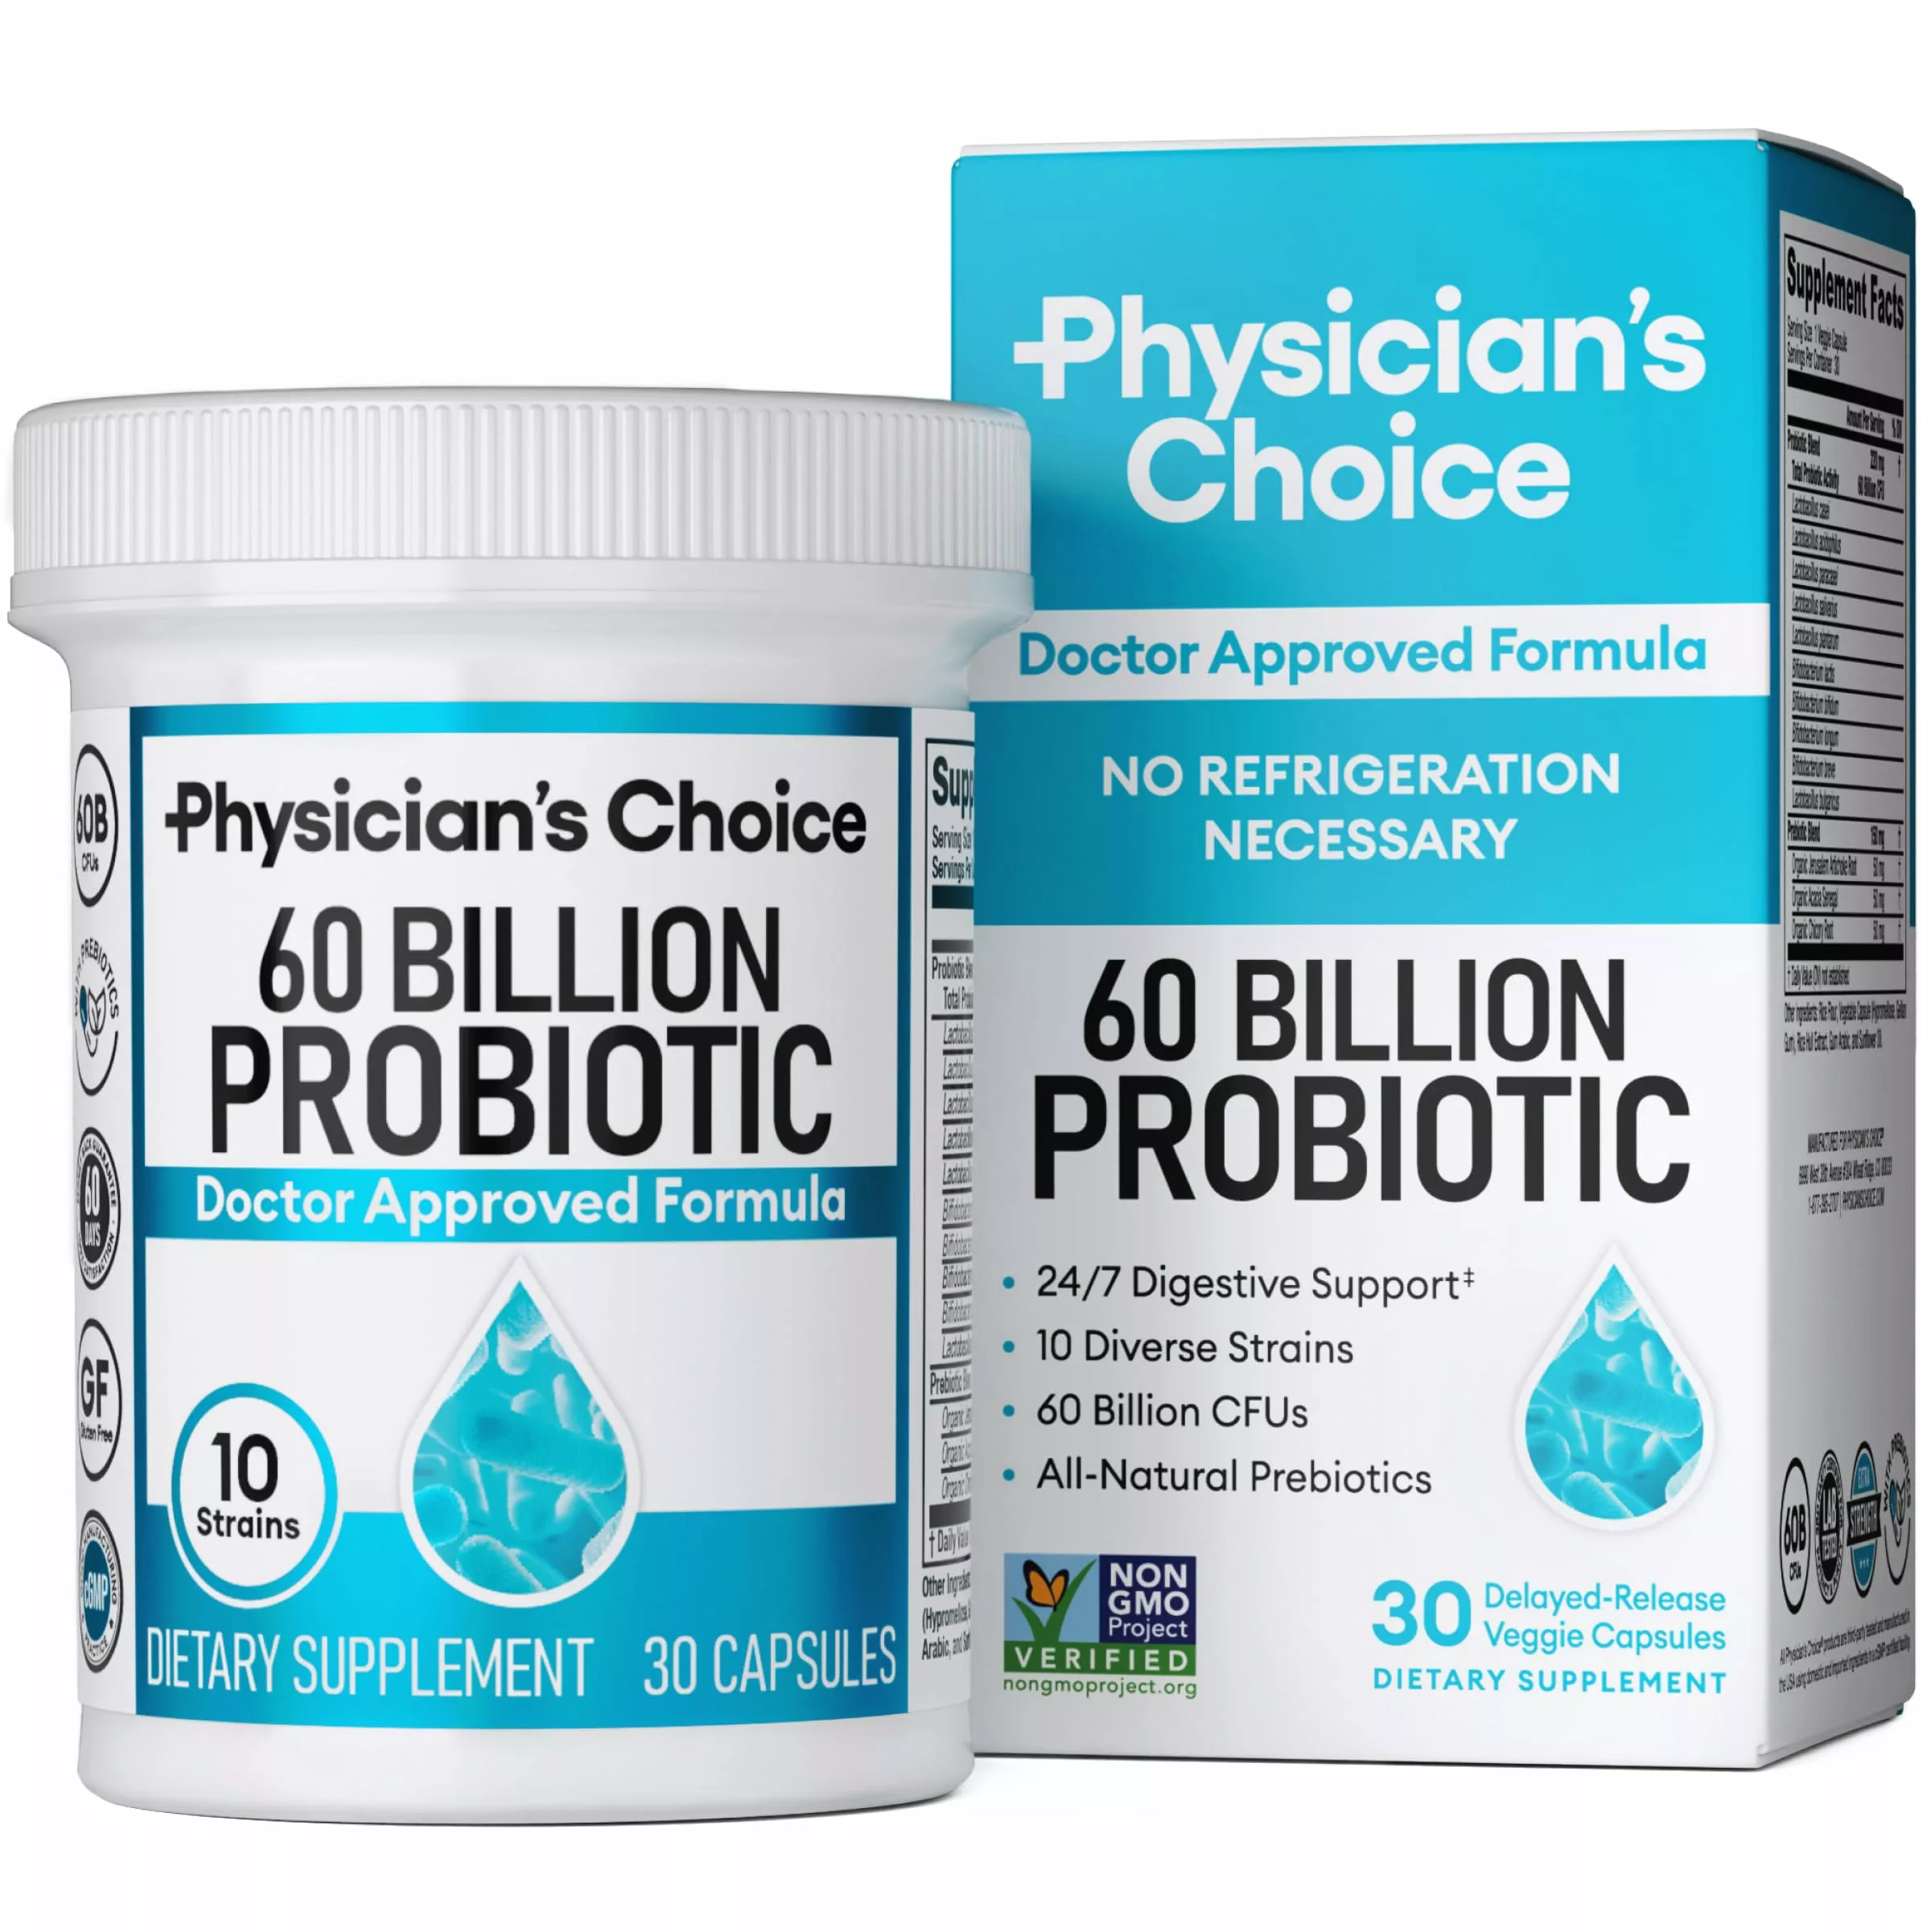 Physician's Choice Probiotics Image